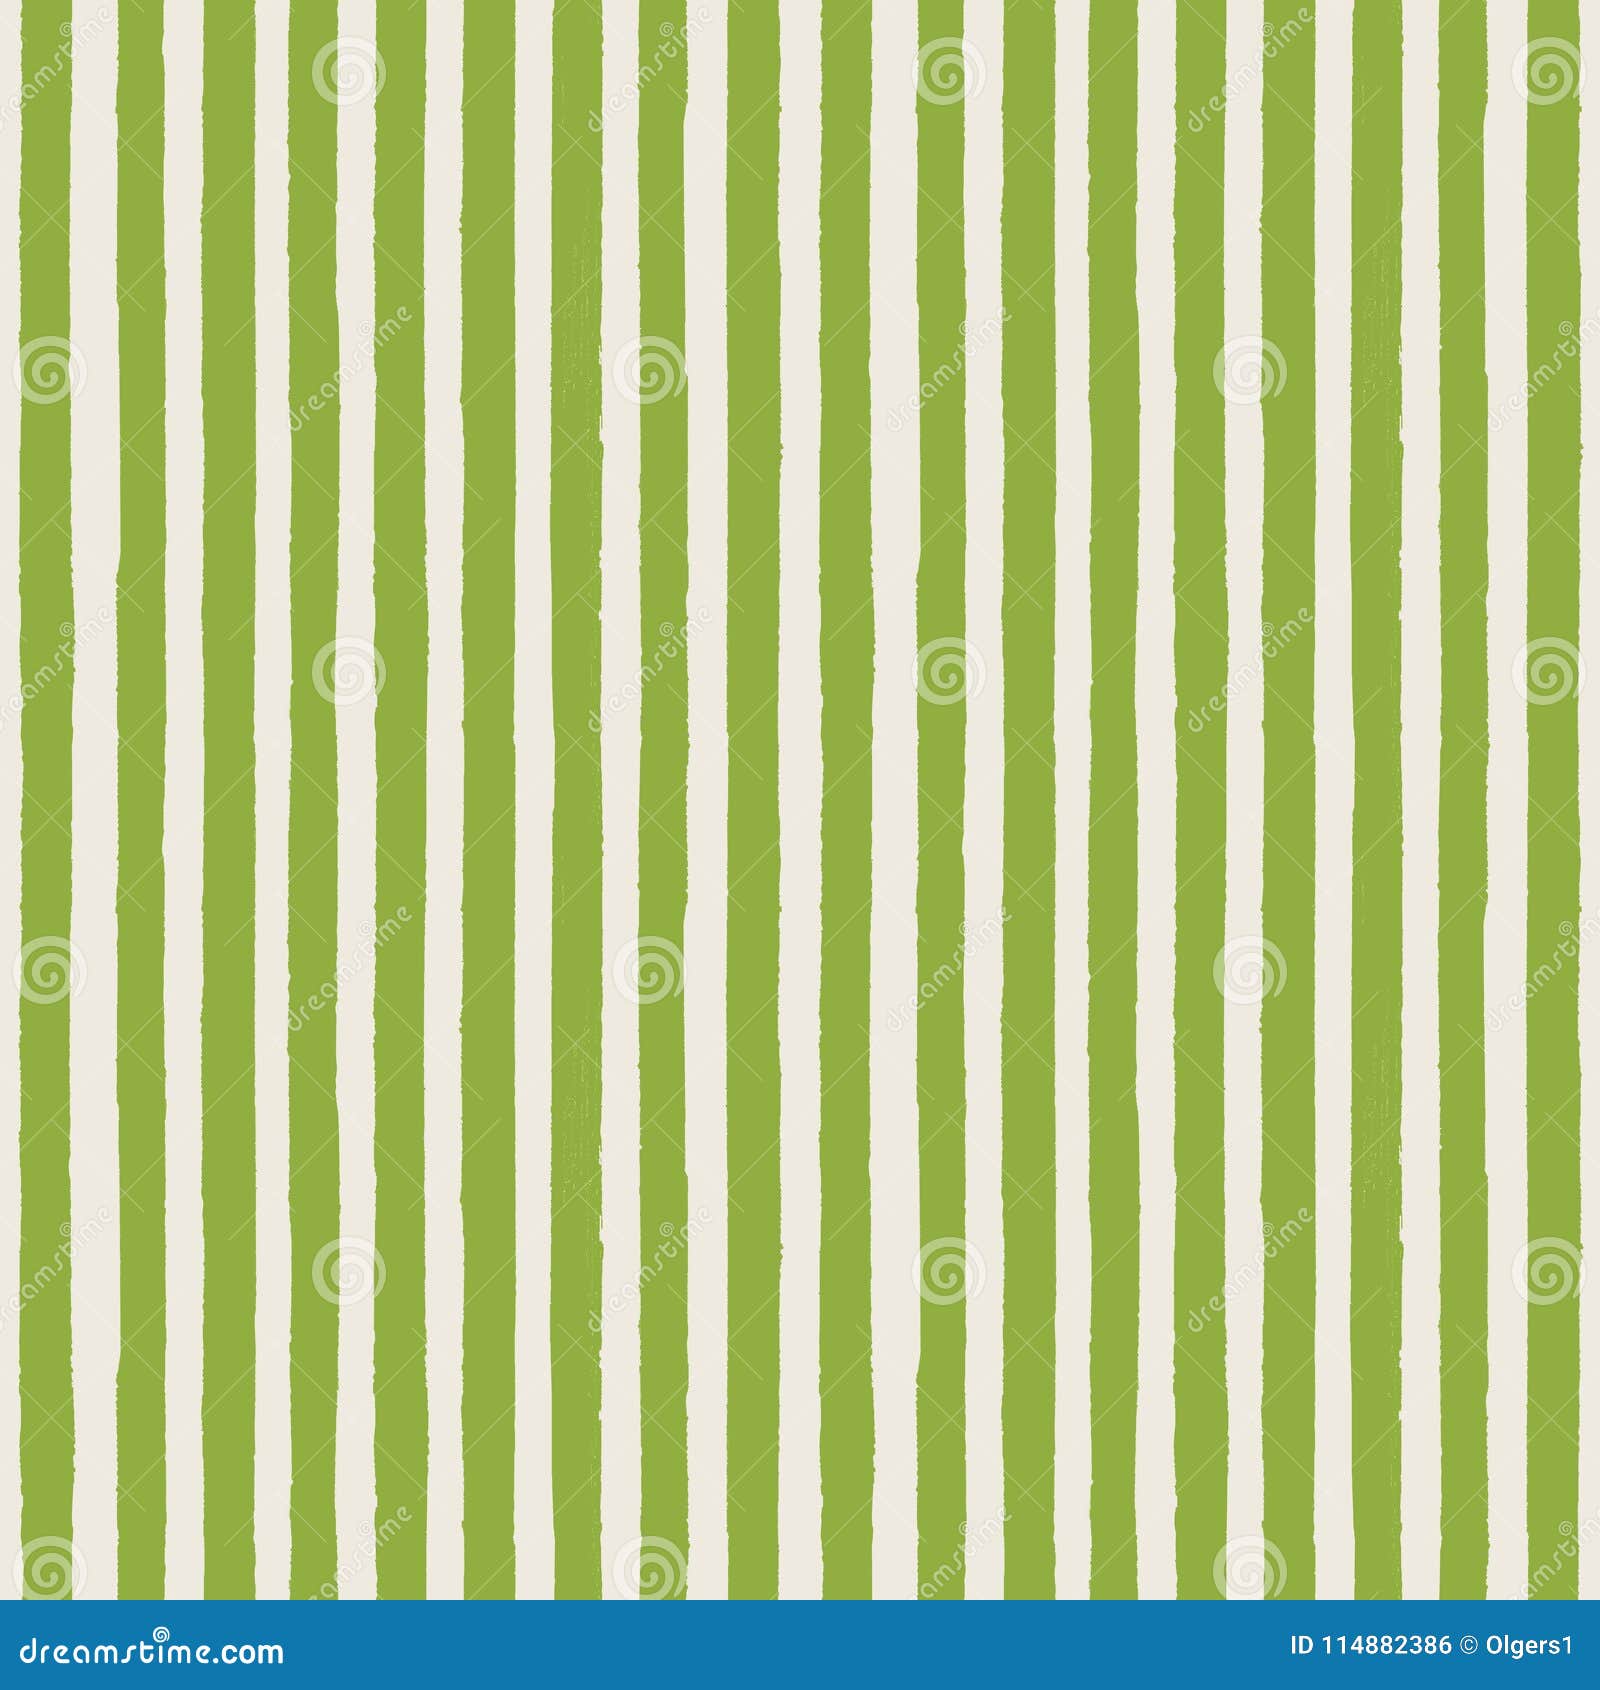 vintage color green stripe seamless pattern